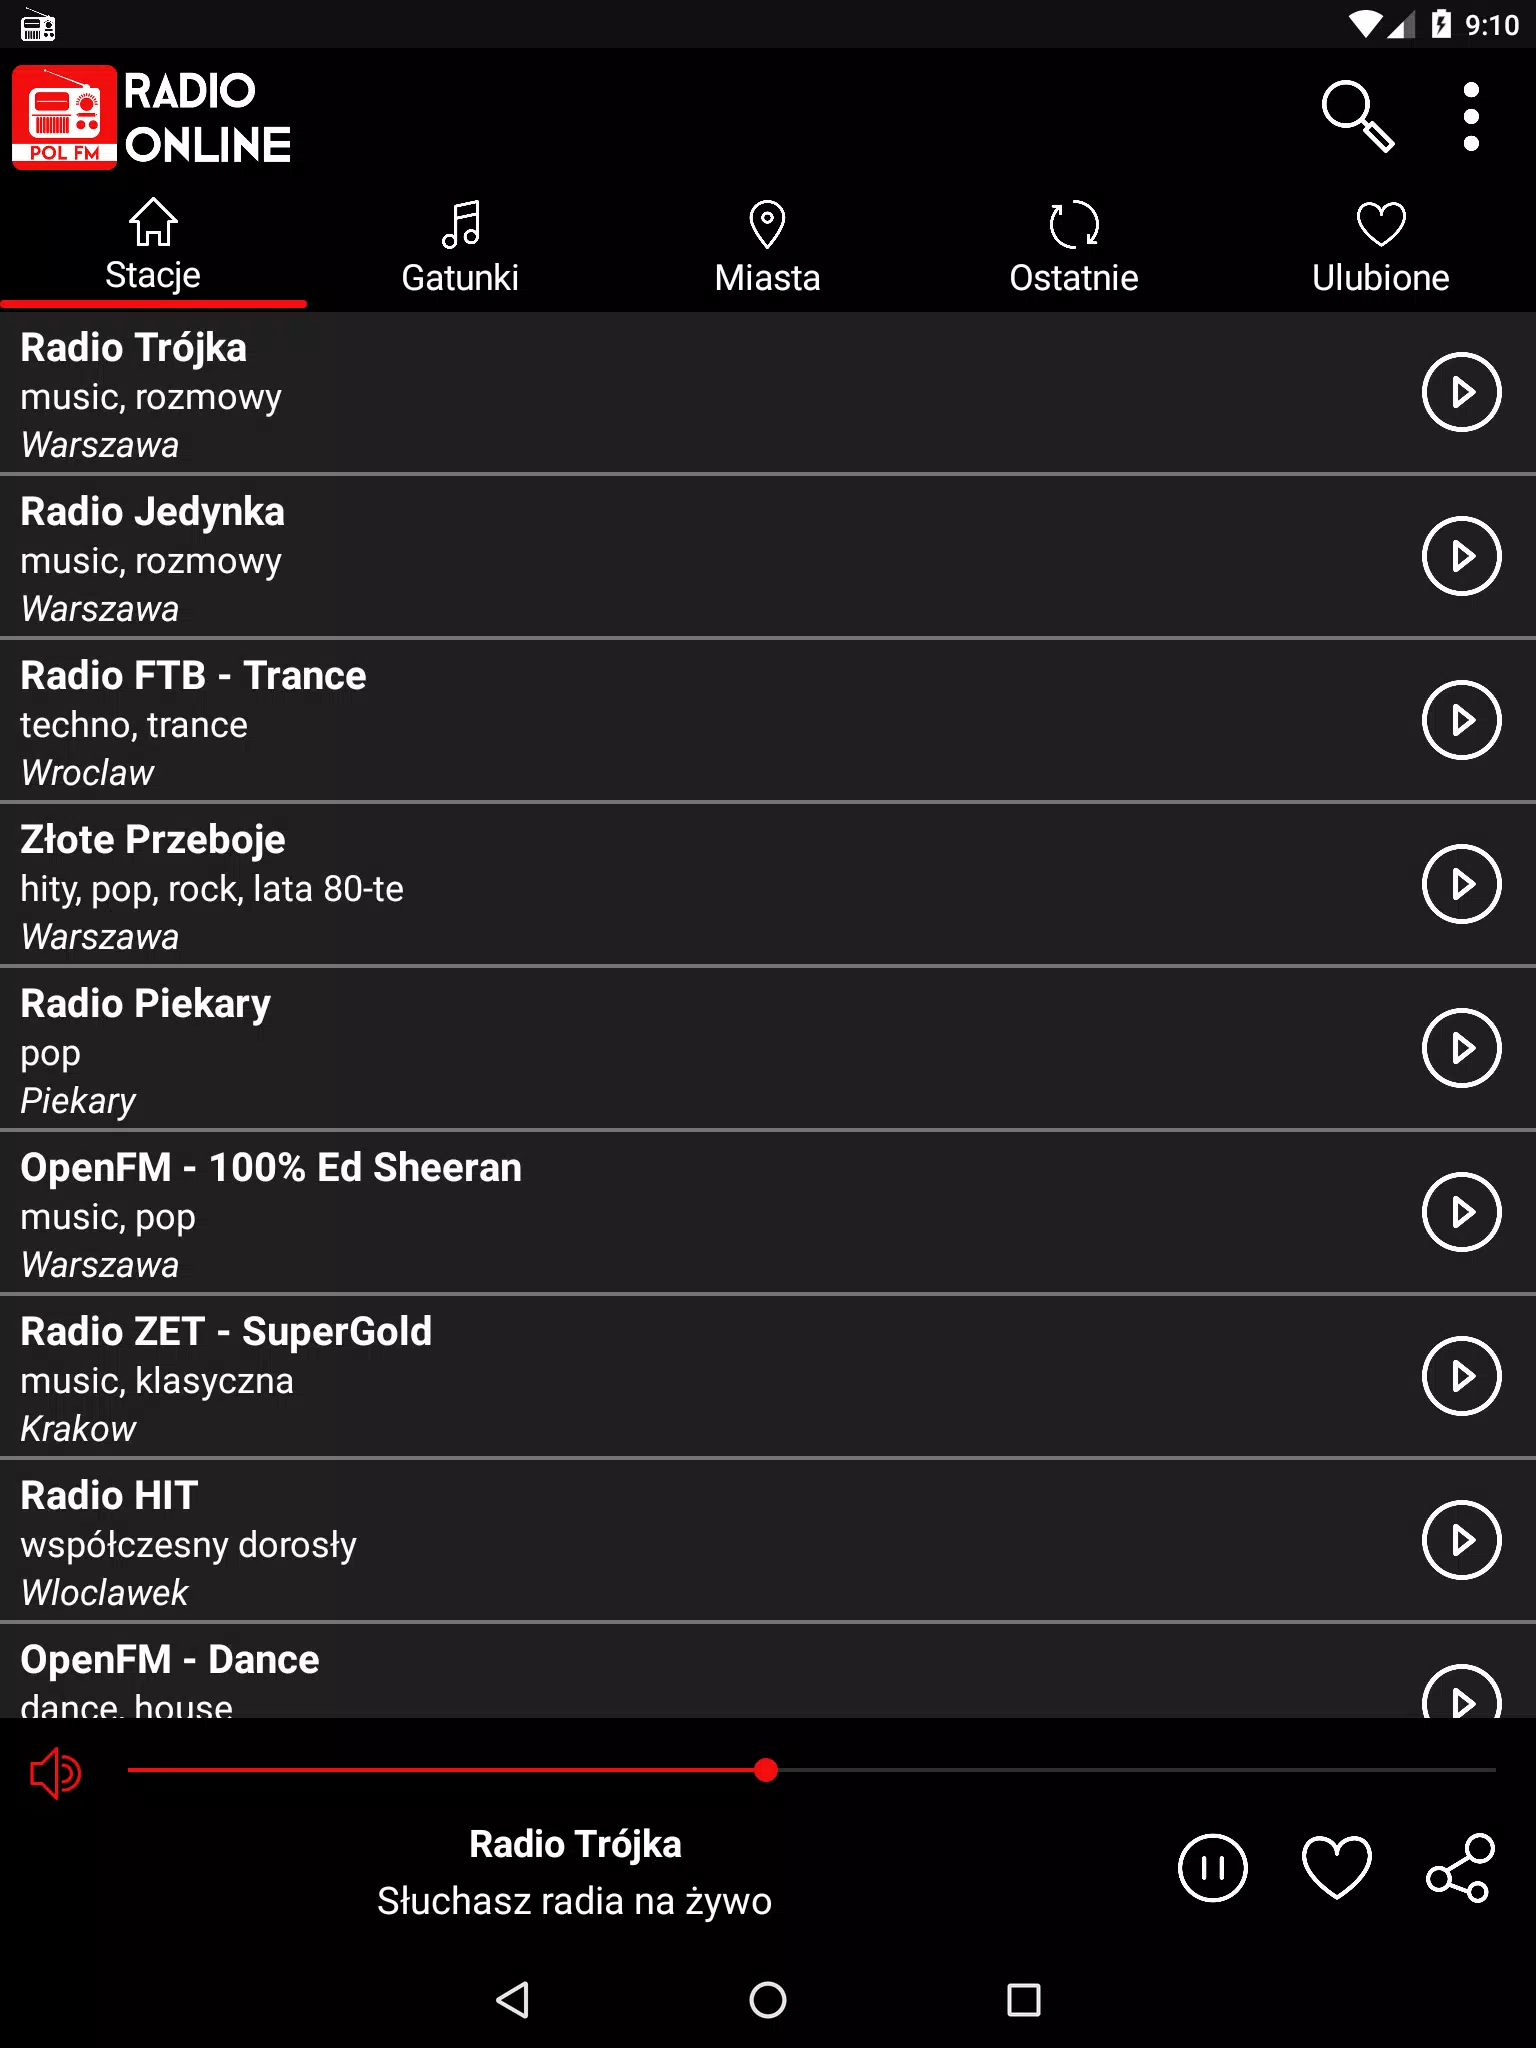 Radio Online Radio Internetowe for Android - APK Download